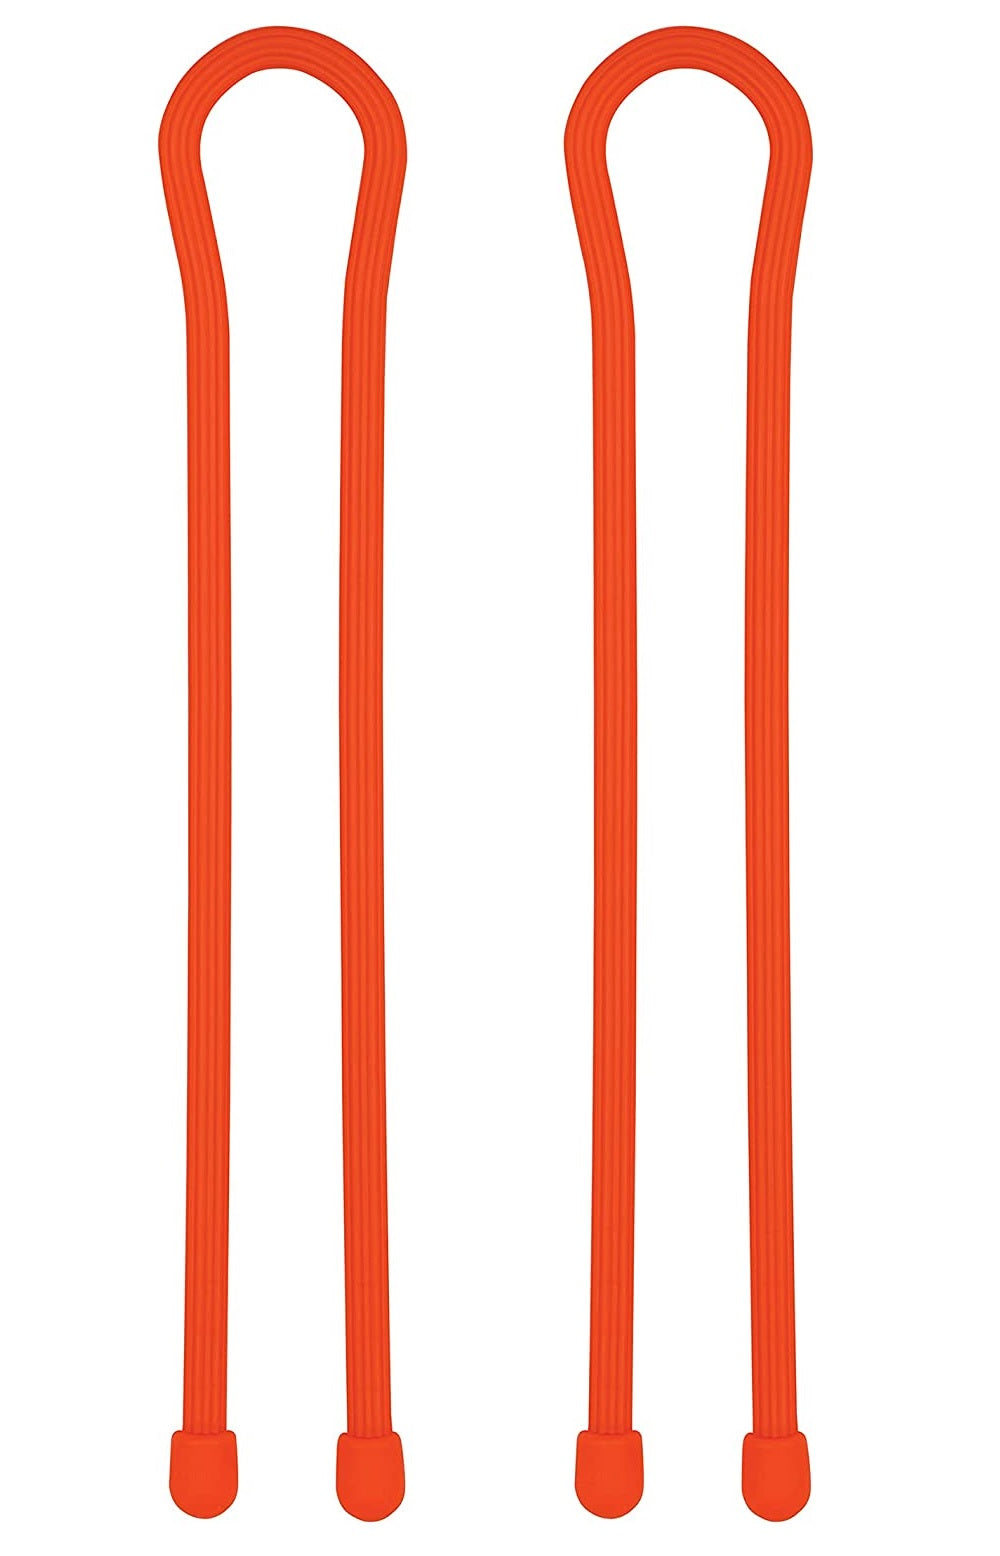 Nite Ize GT18-31-2R3 Gear Tie Reusable Twist Tie, Bright Orange